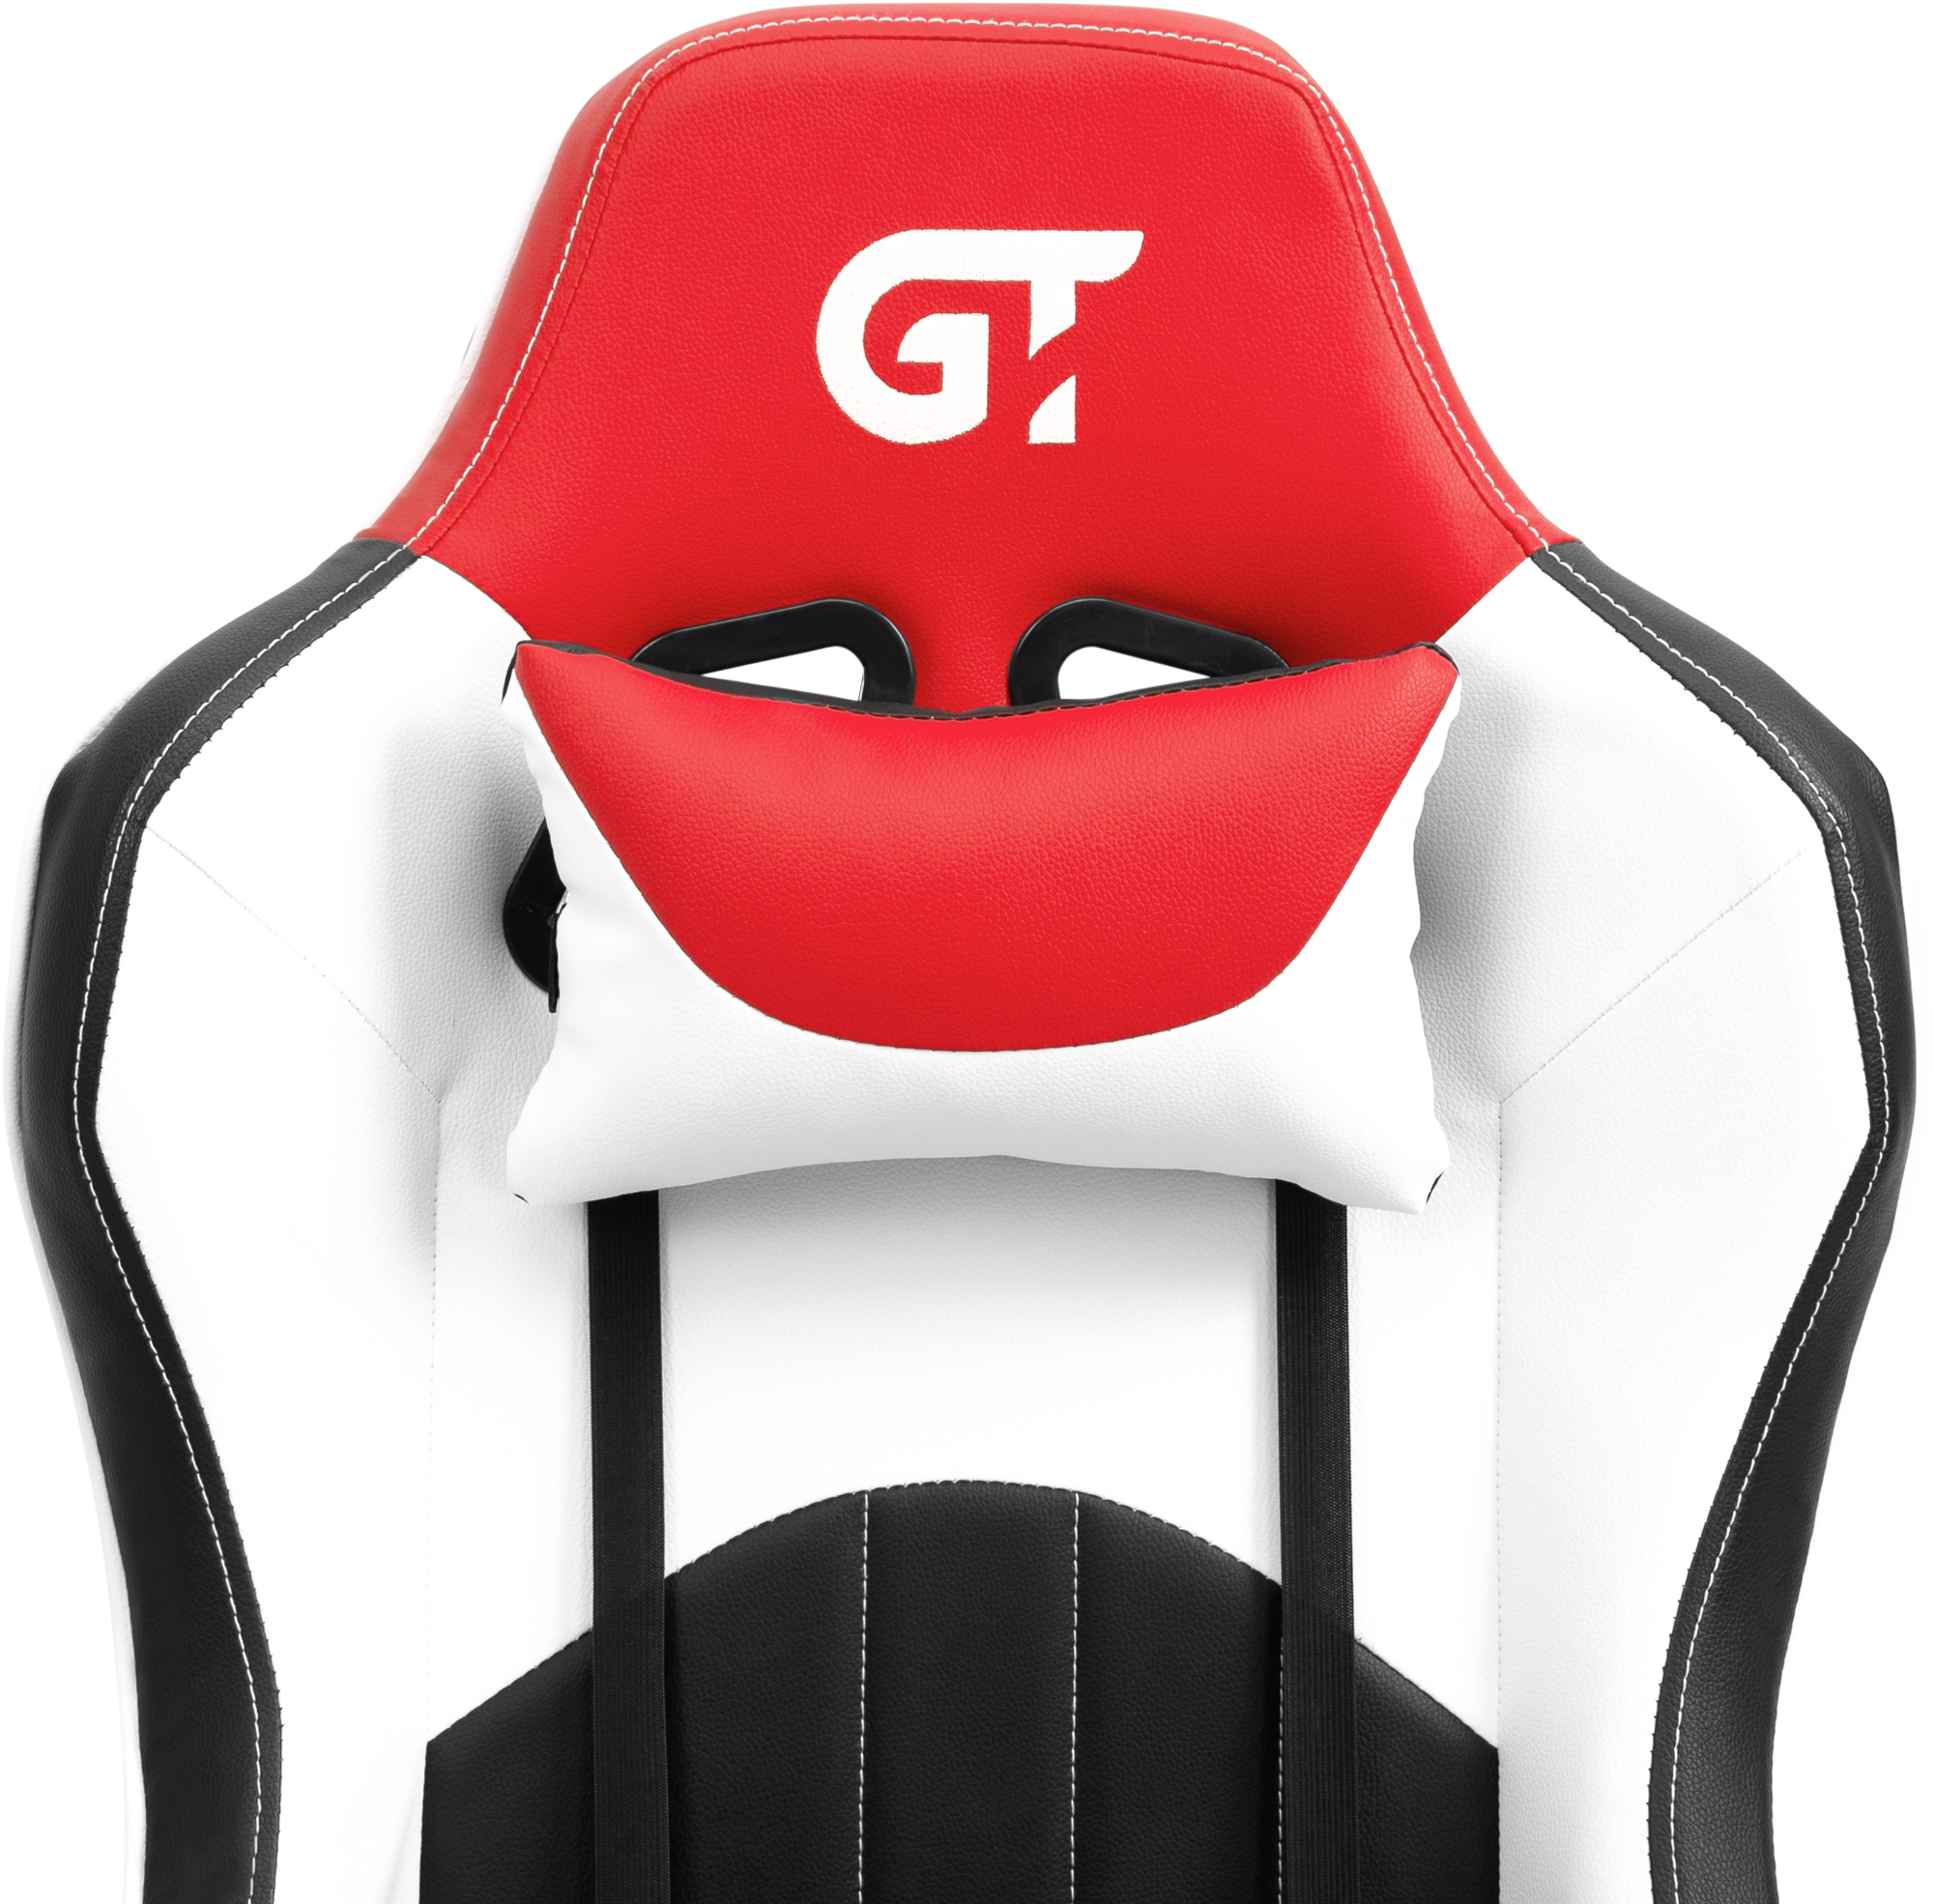 Геймерське крісло GT Racer чорне червоно-біле (X-5813 Black/Red/White) - фото 12